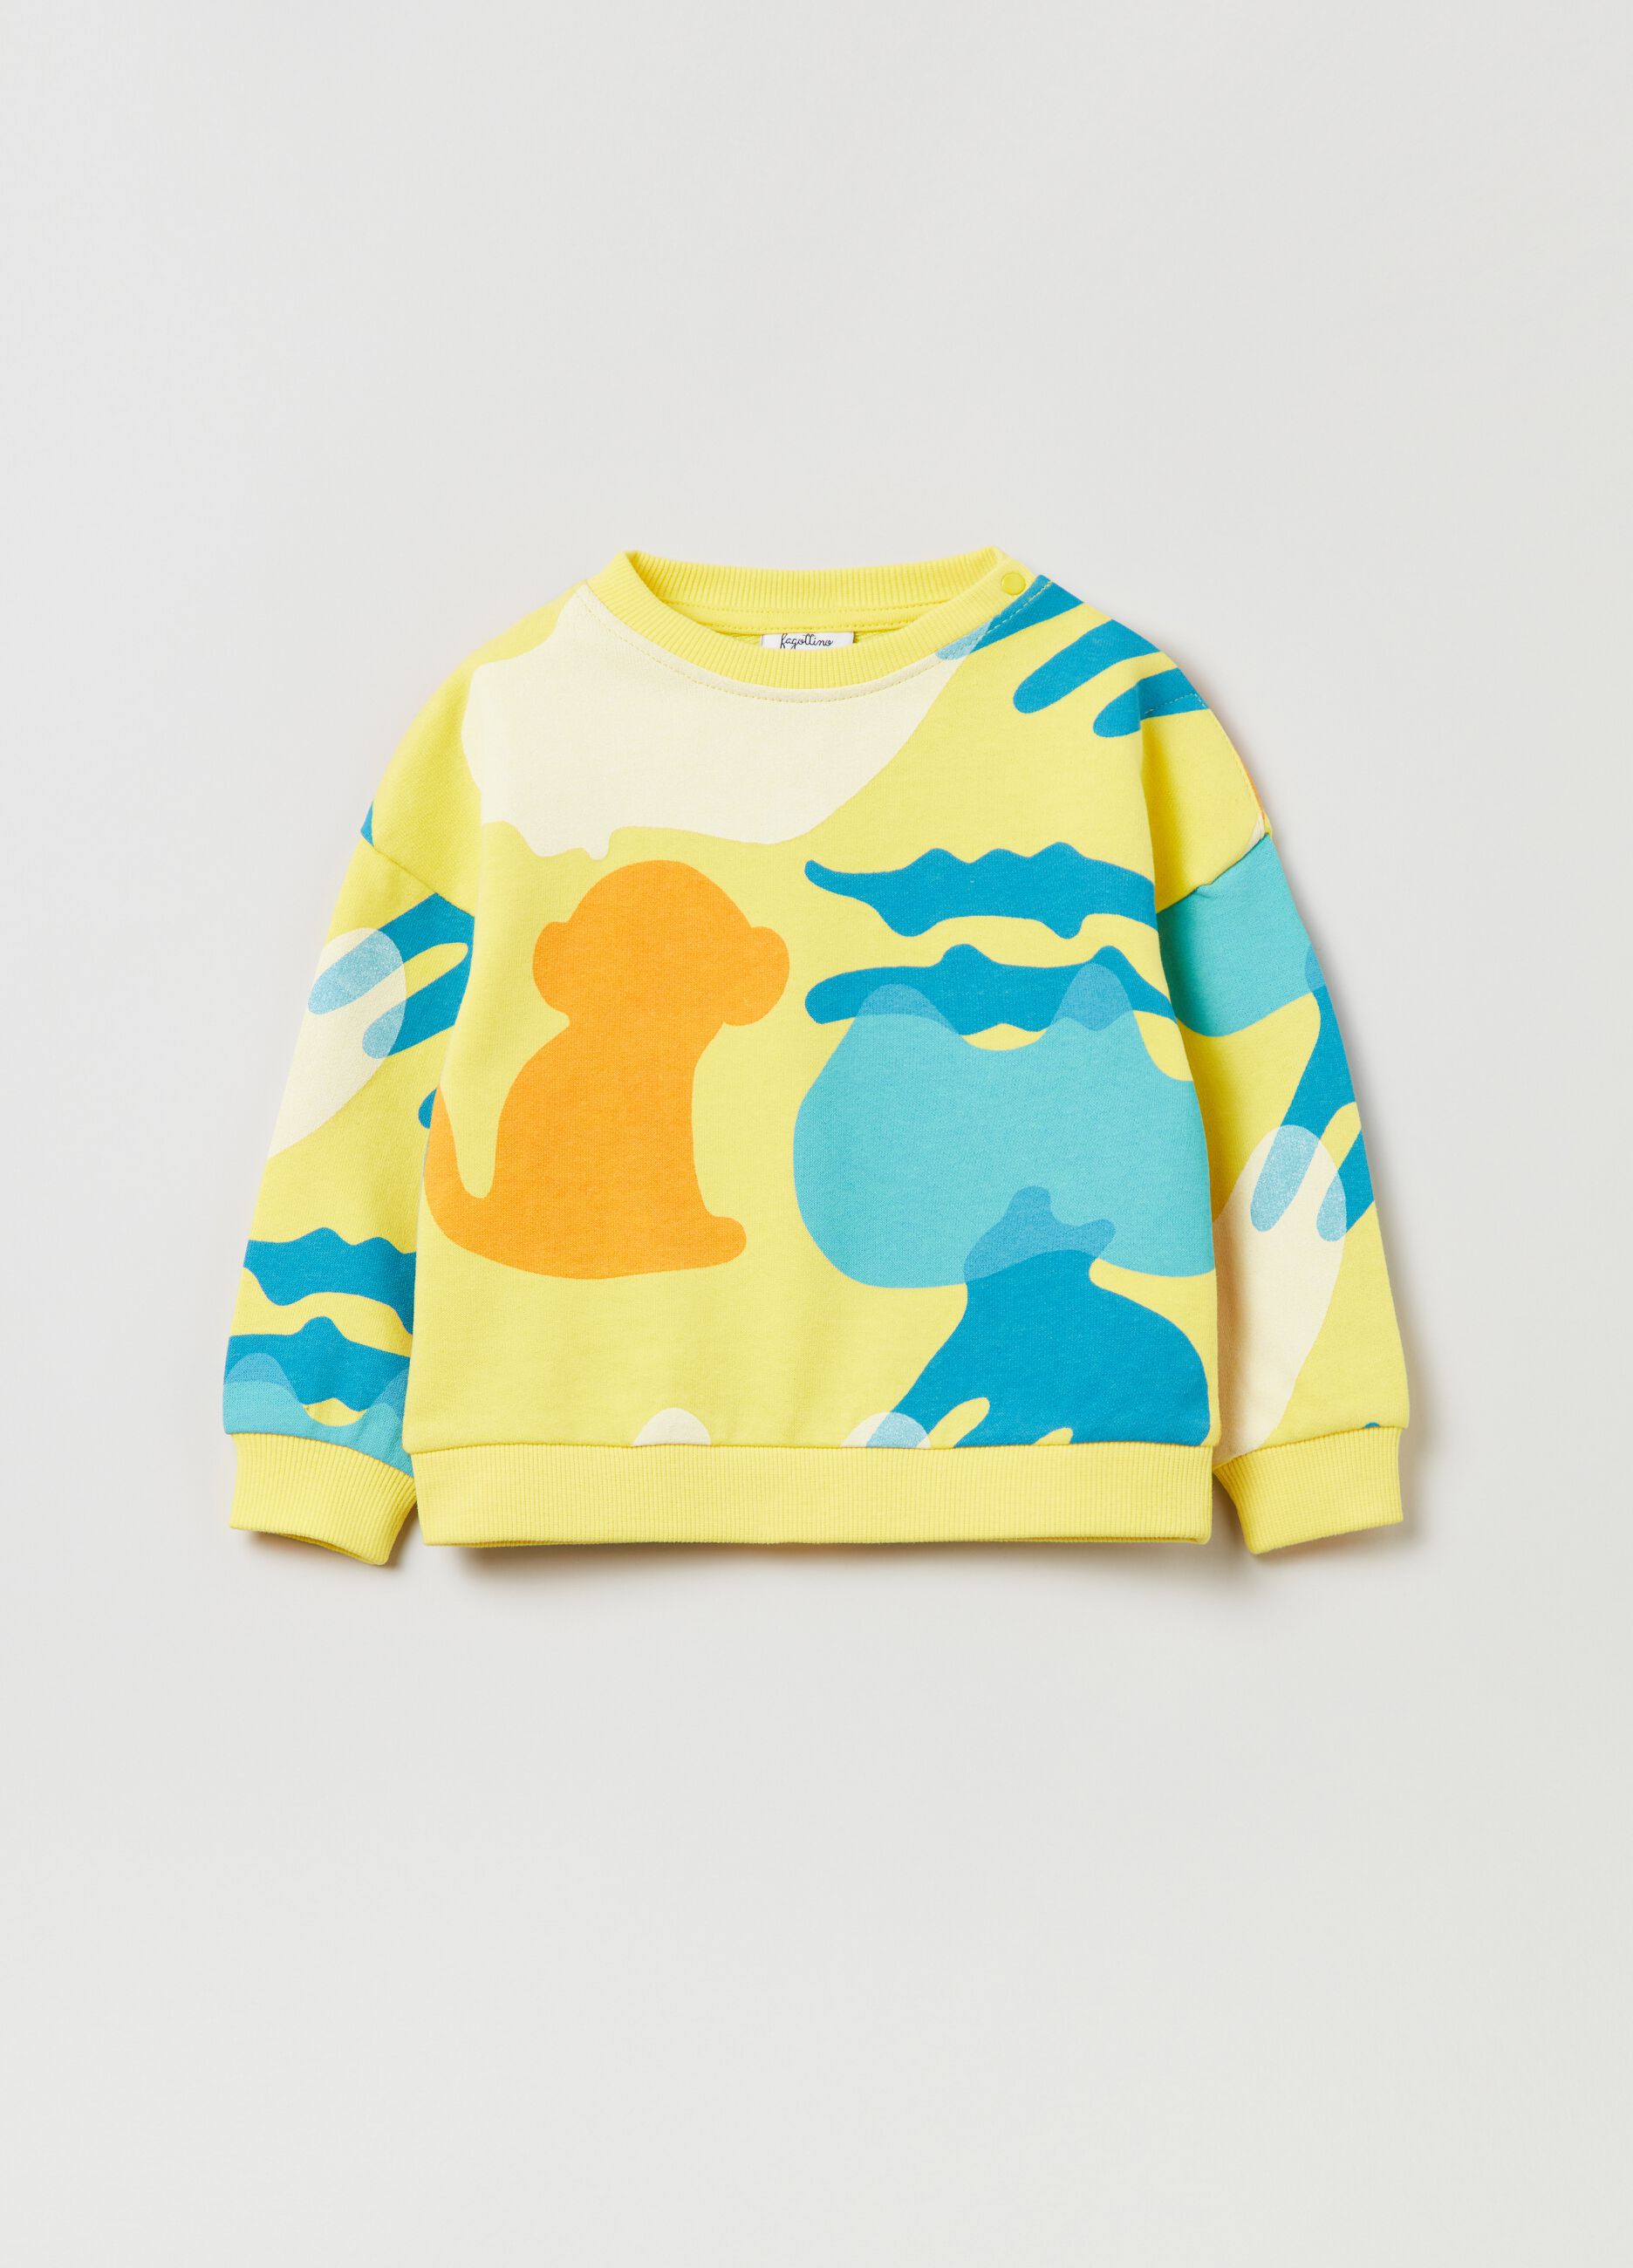 Lightweight sweatshirt with animal print.